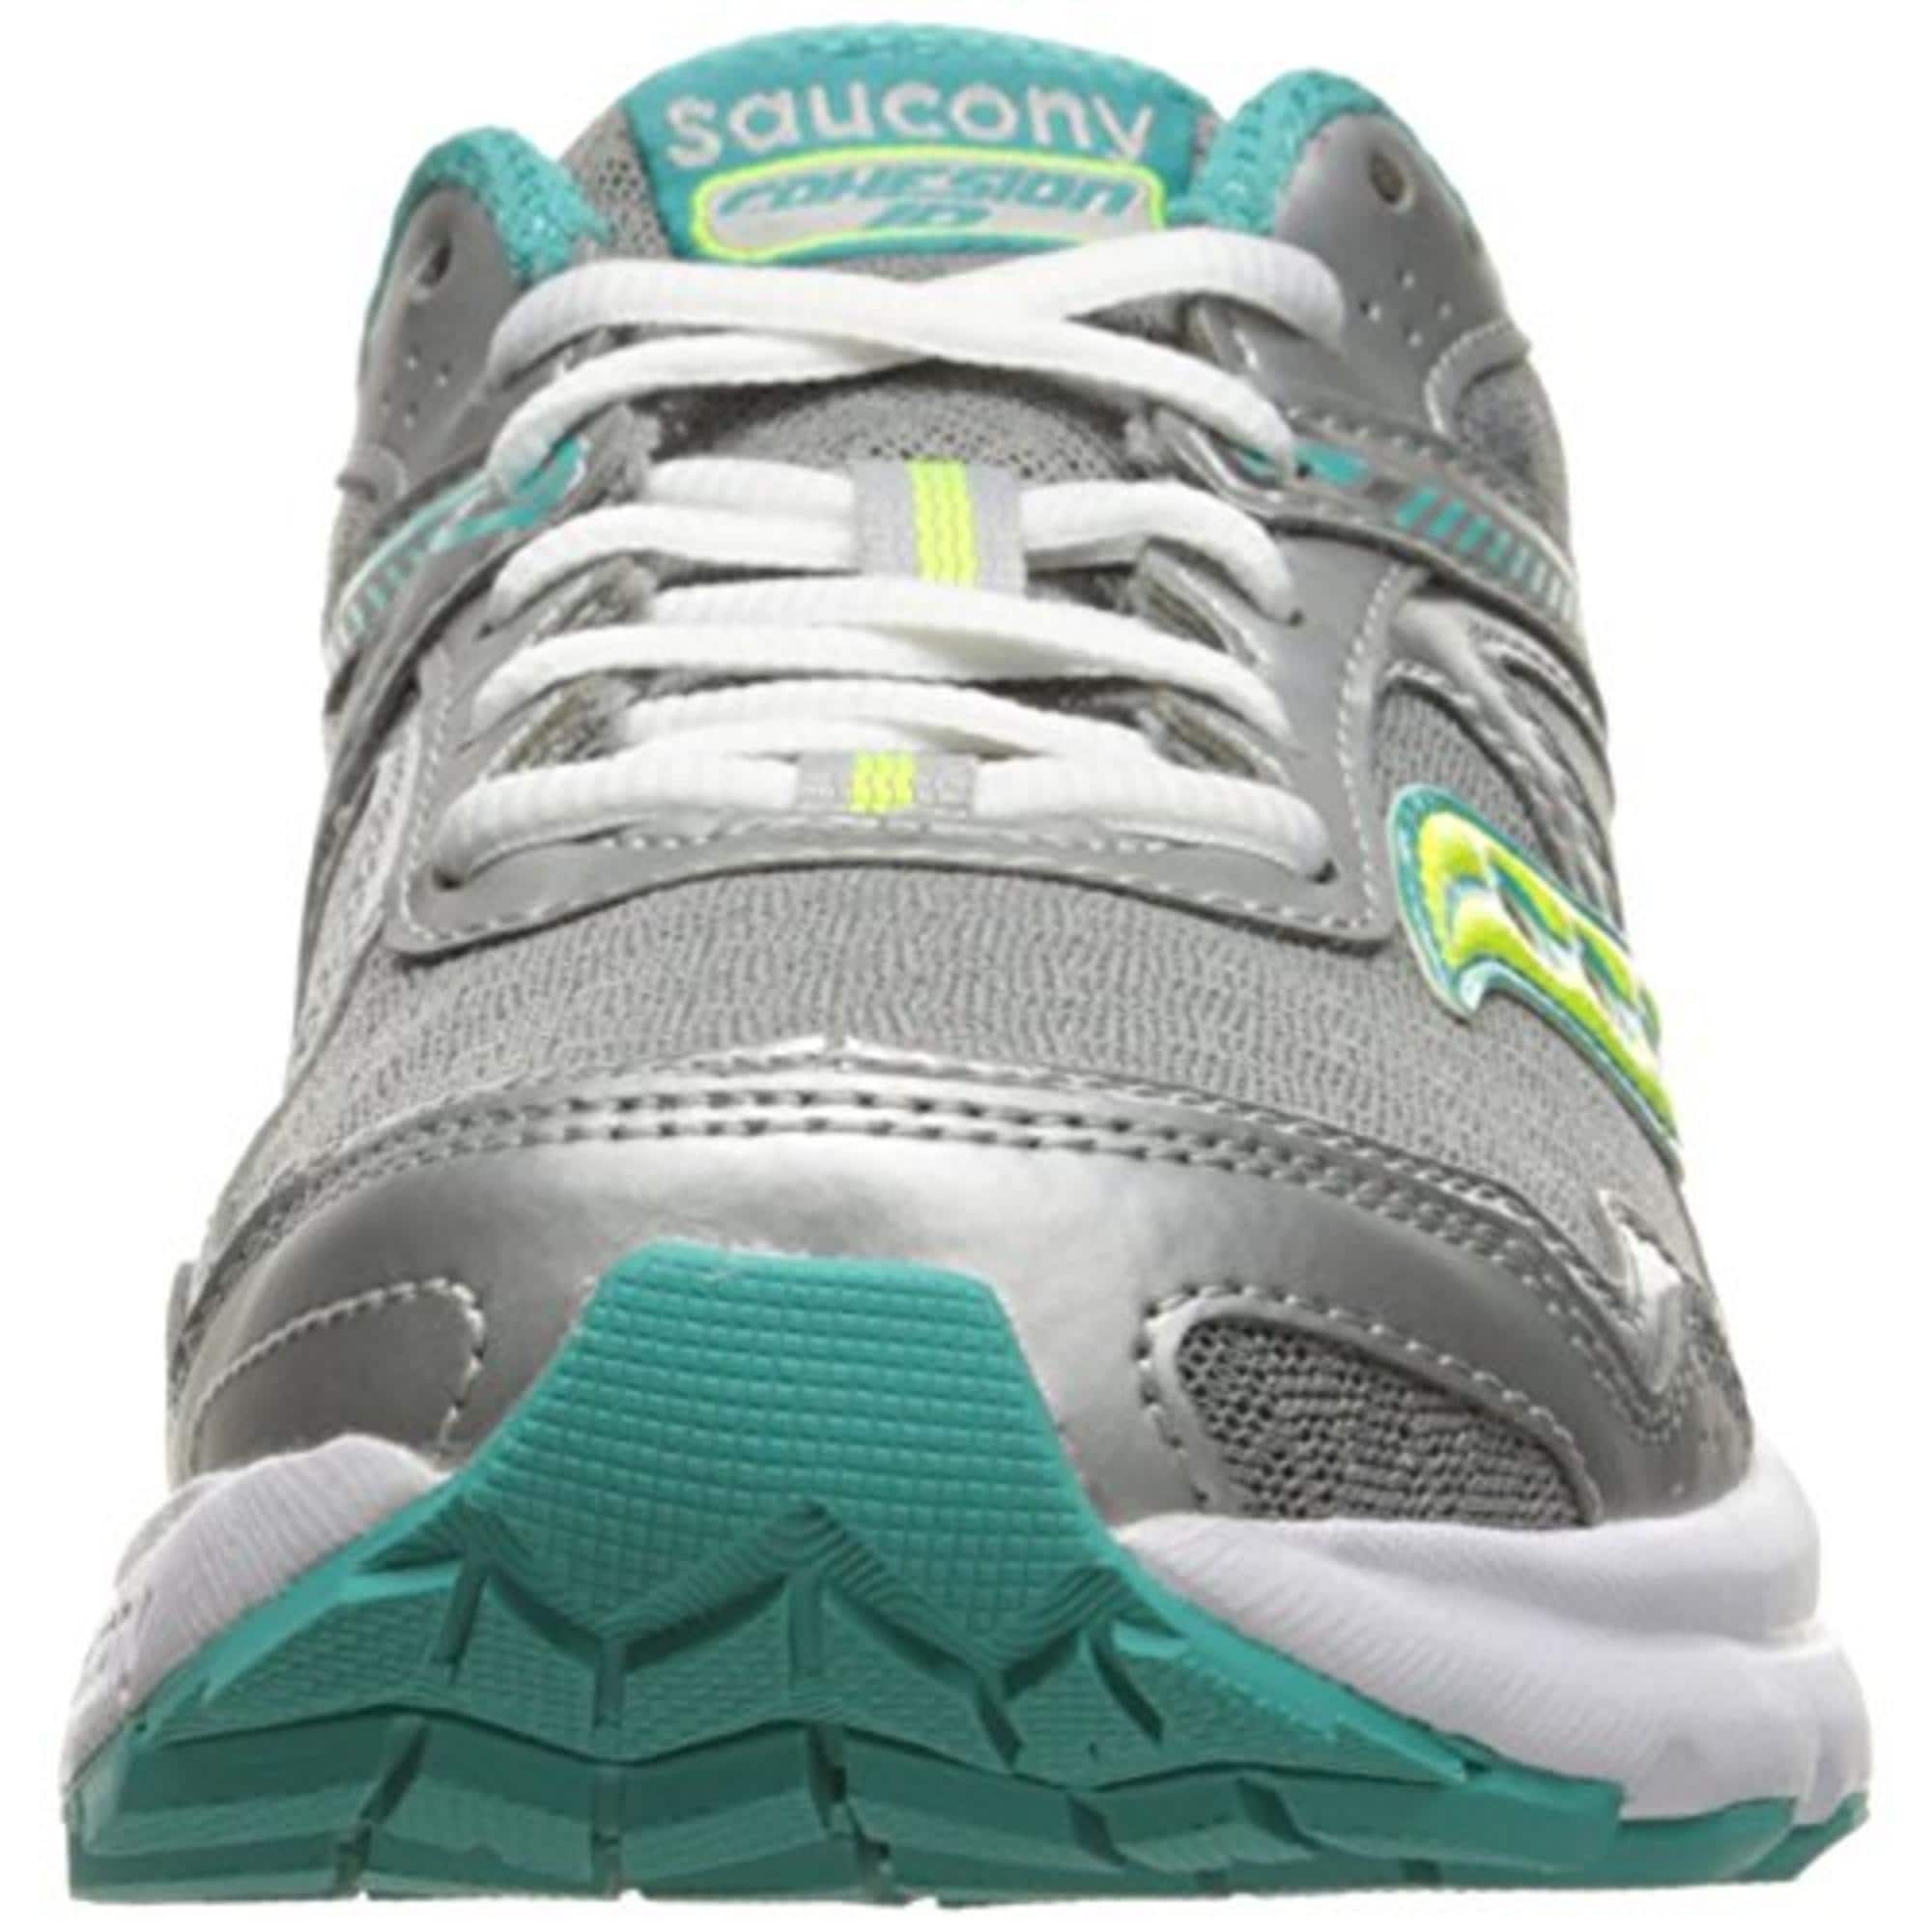 saucony cohesion 10 running shoe women's